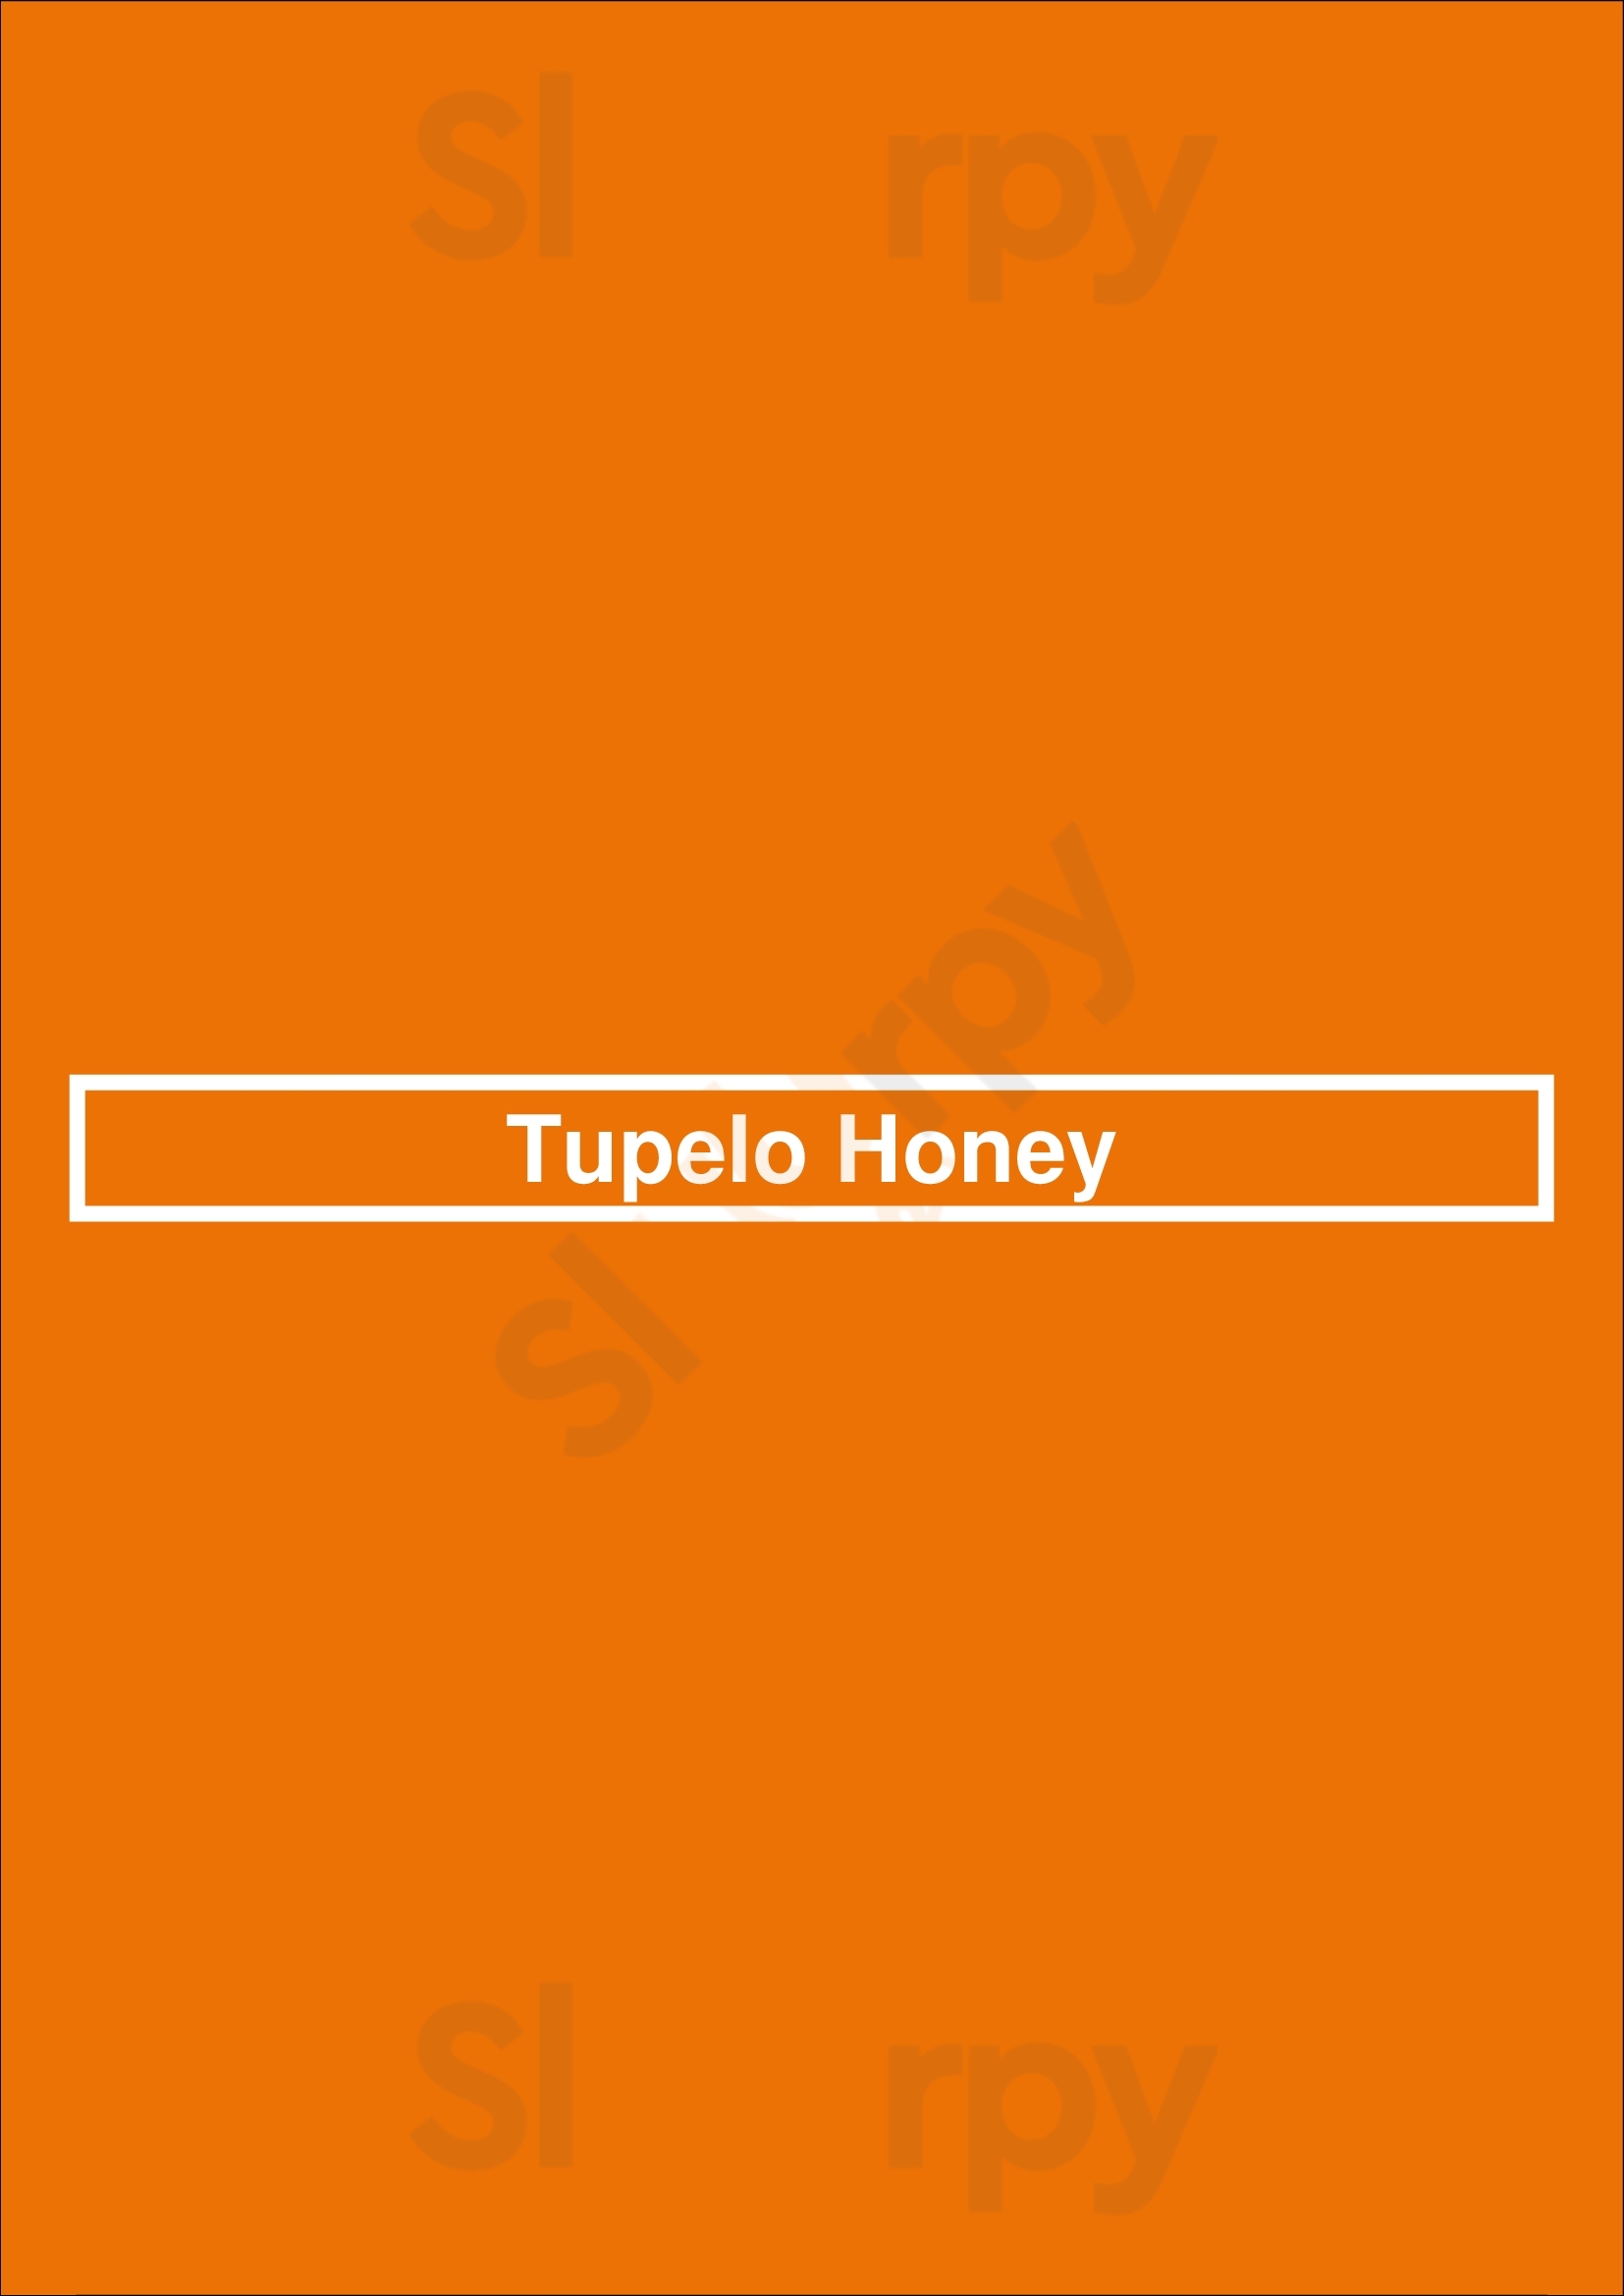 Tupelo Honey Southern Kitchen & Bar Knoxville Menu - 1